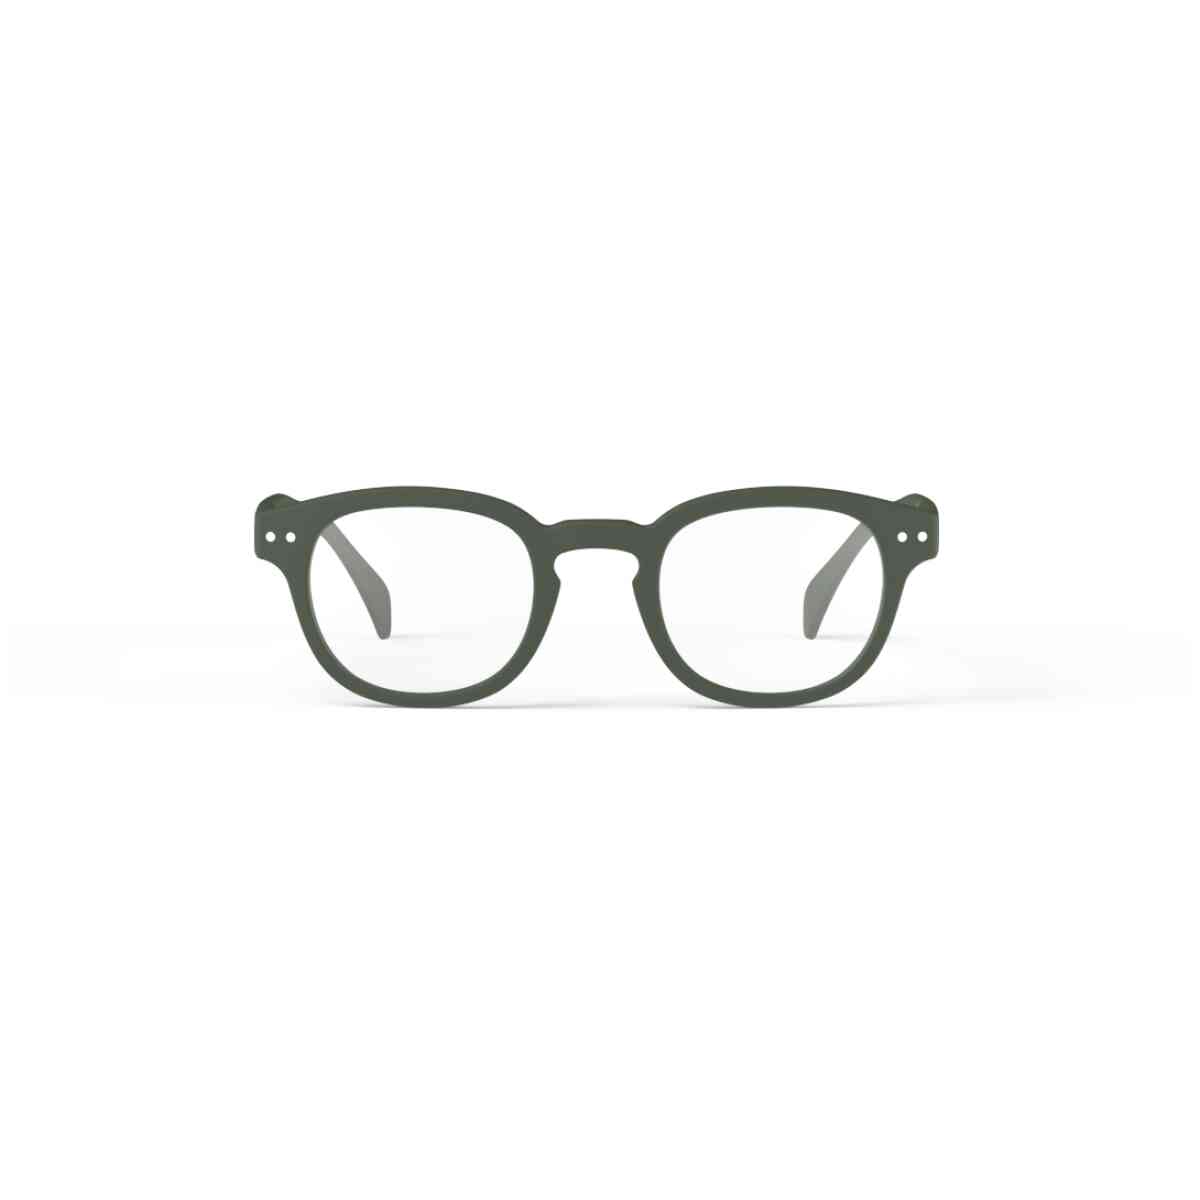 c kaki green reading glasses